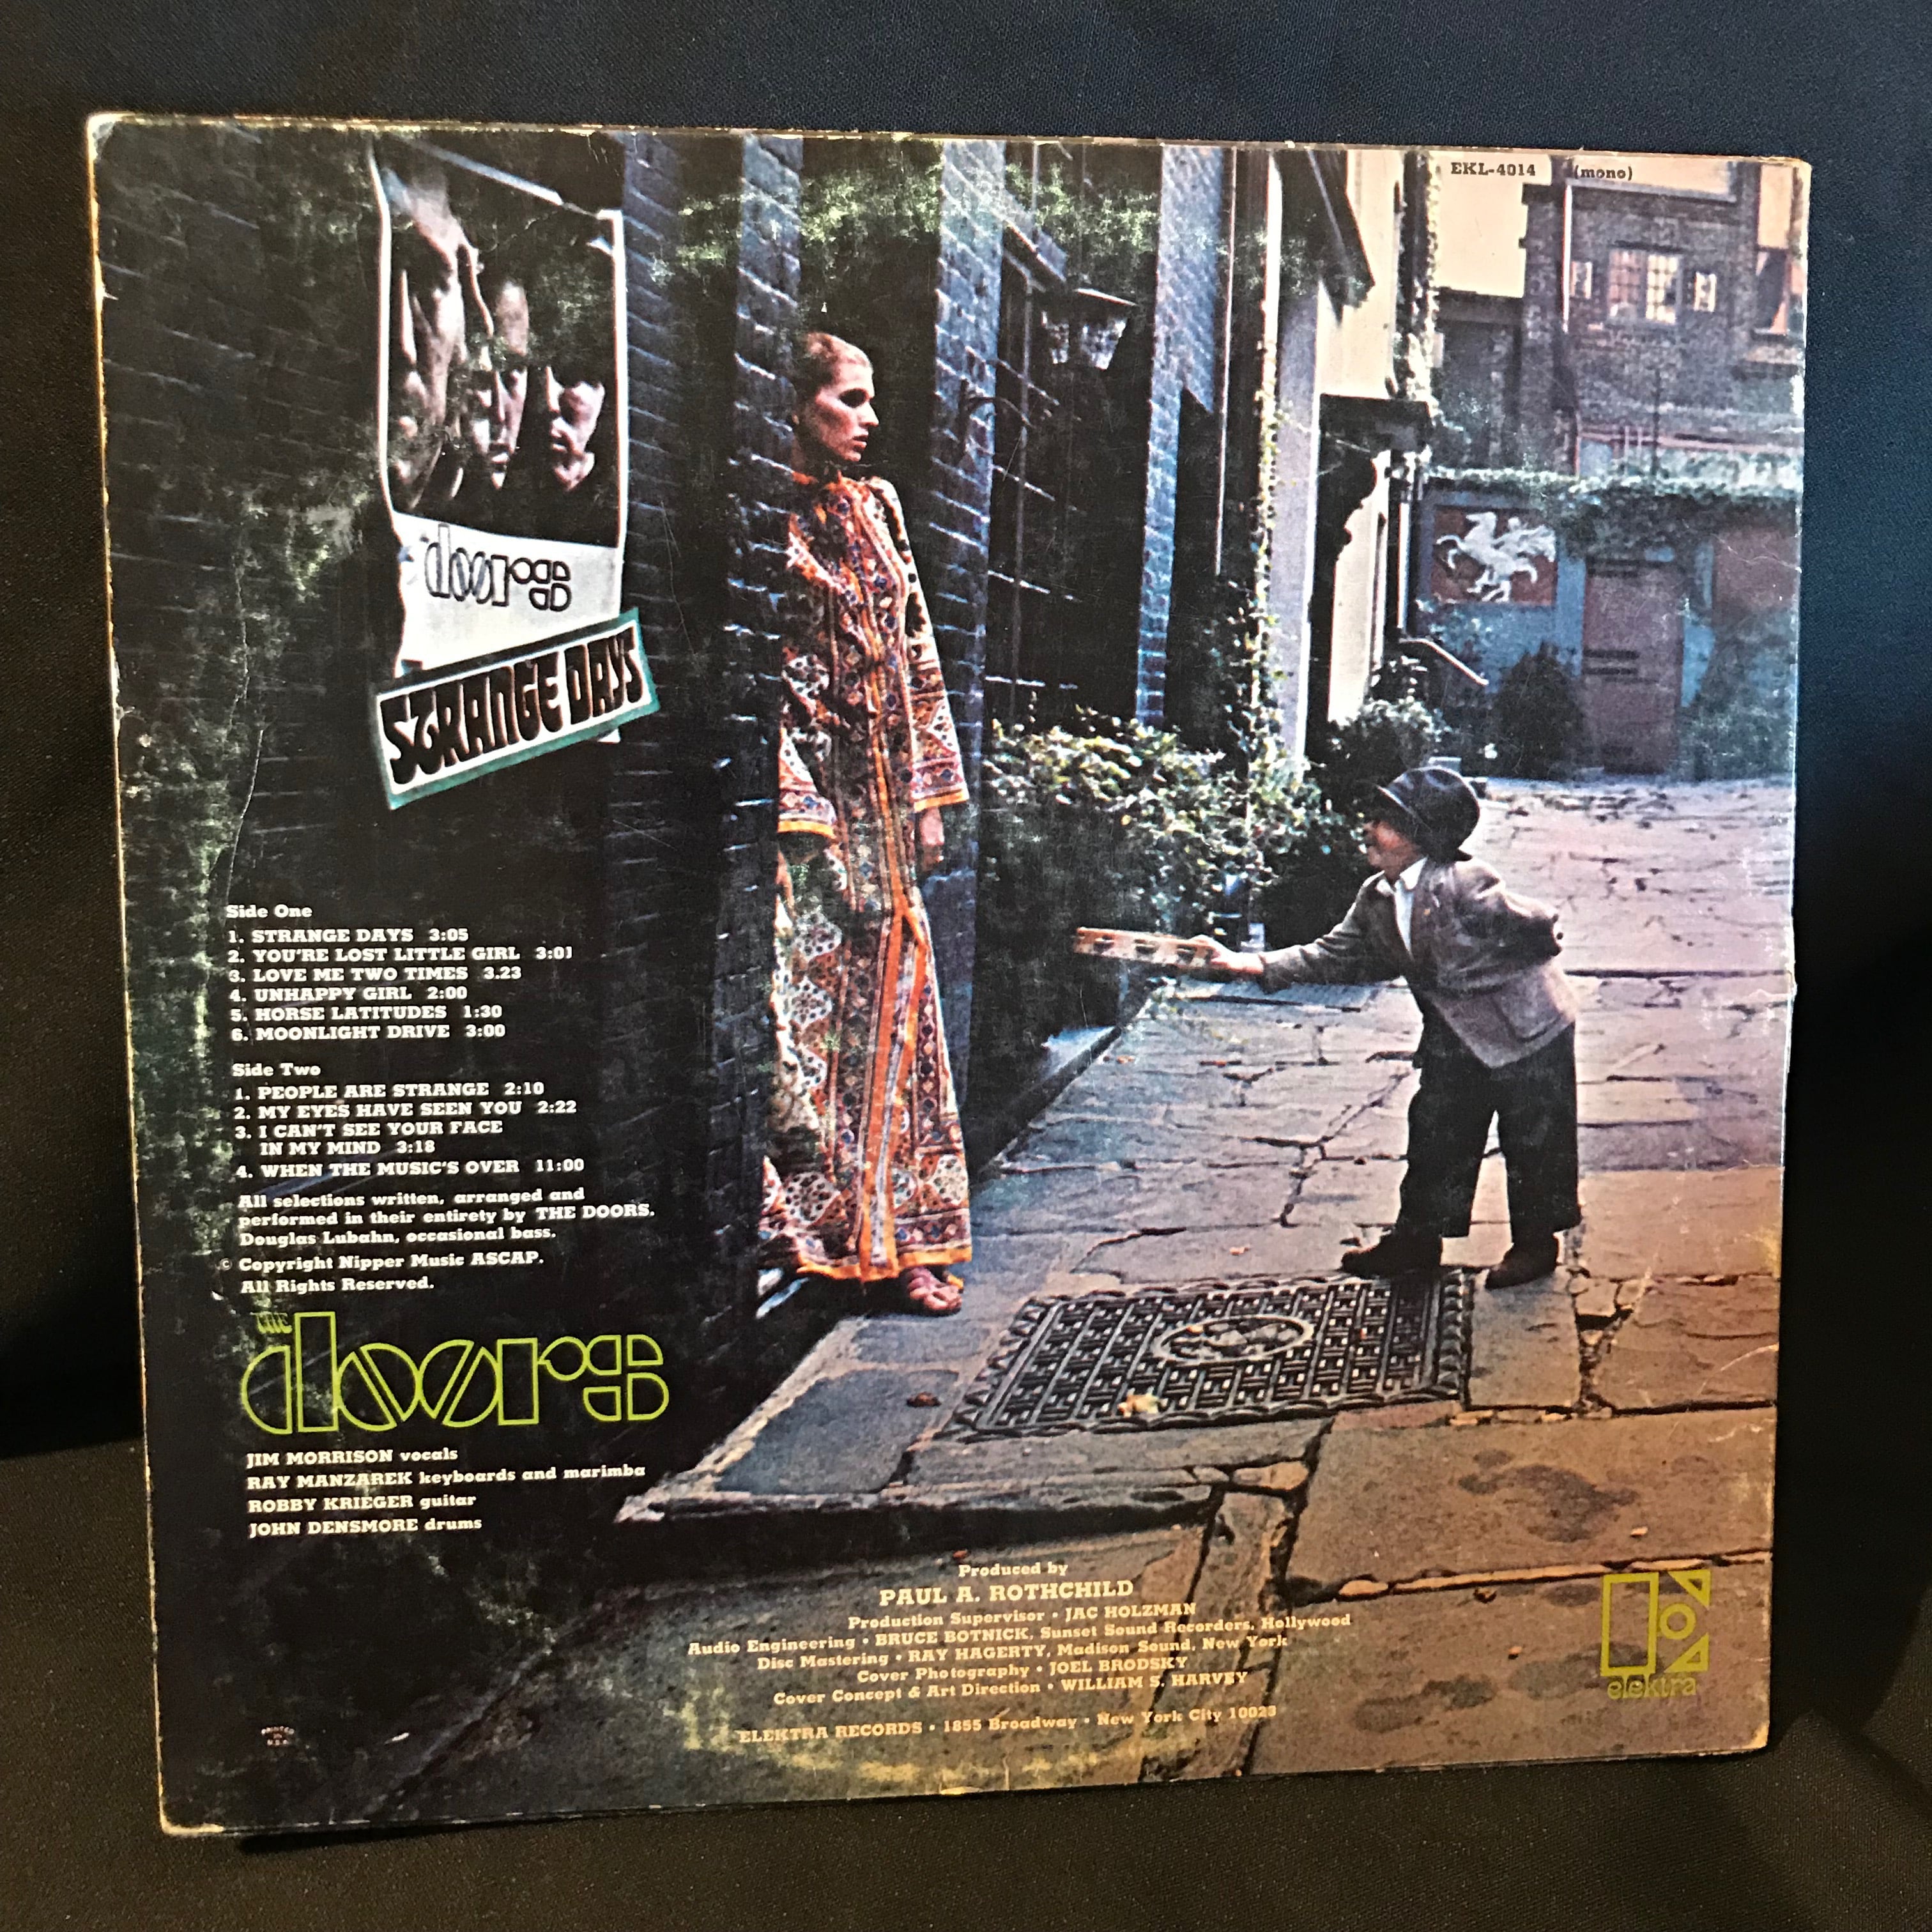 Doors – Strange Days sealed original 1967 U.S. mono LP